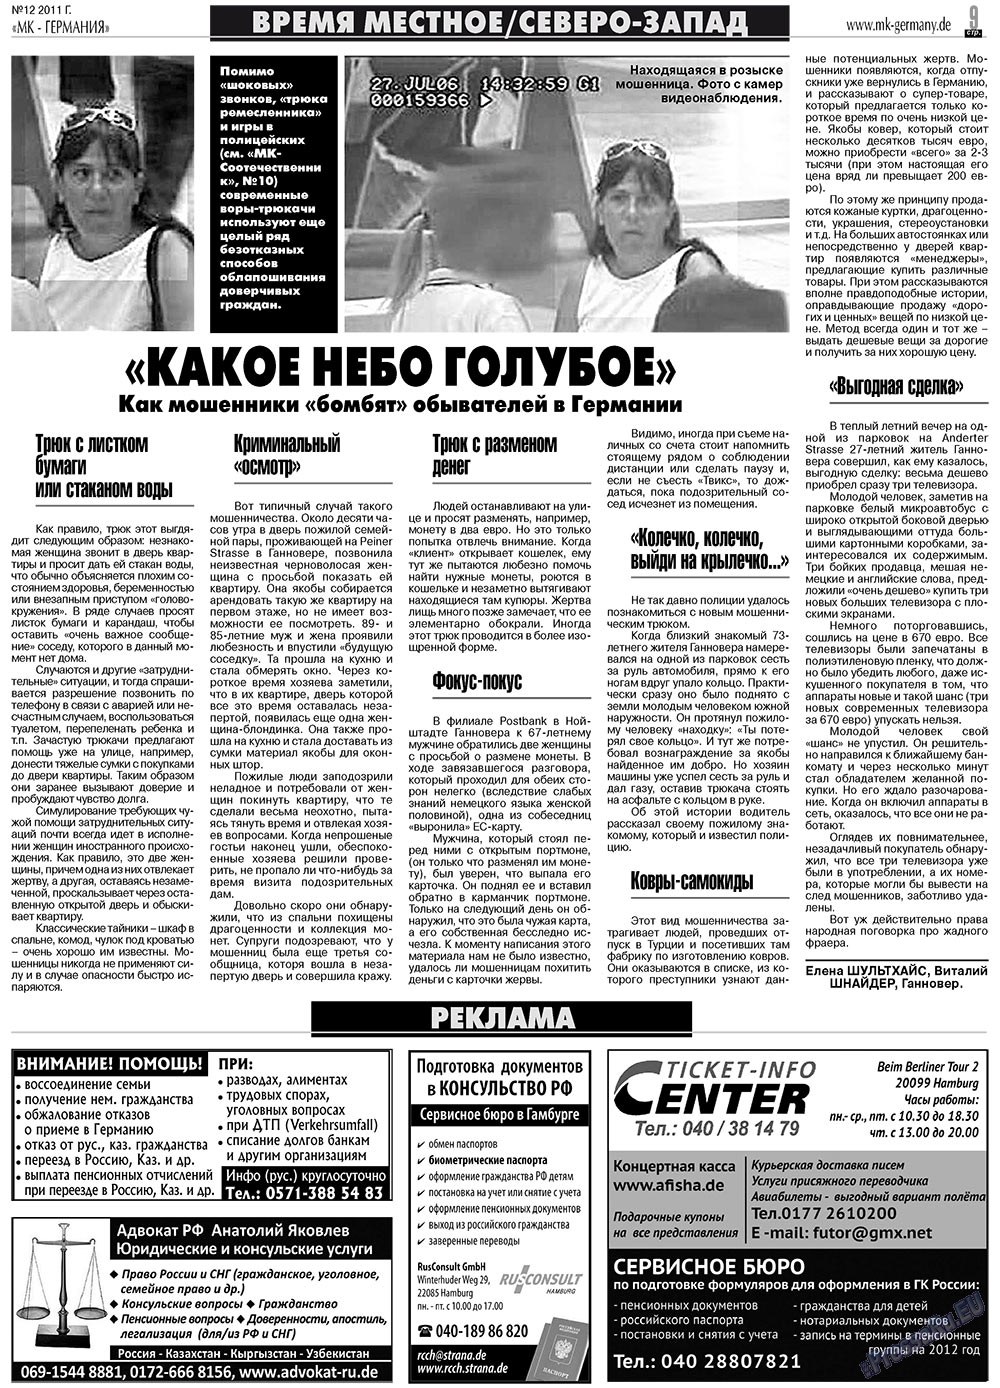 МК-Германия планета мнений, газета. 2011 №12 стр.9